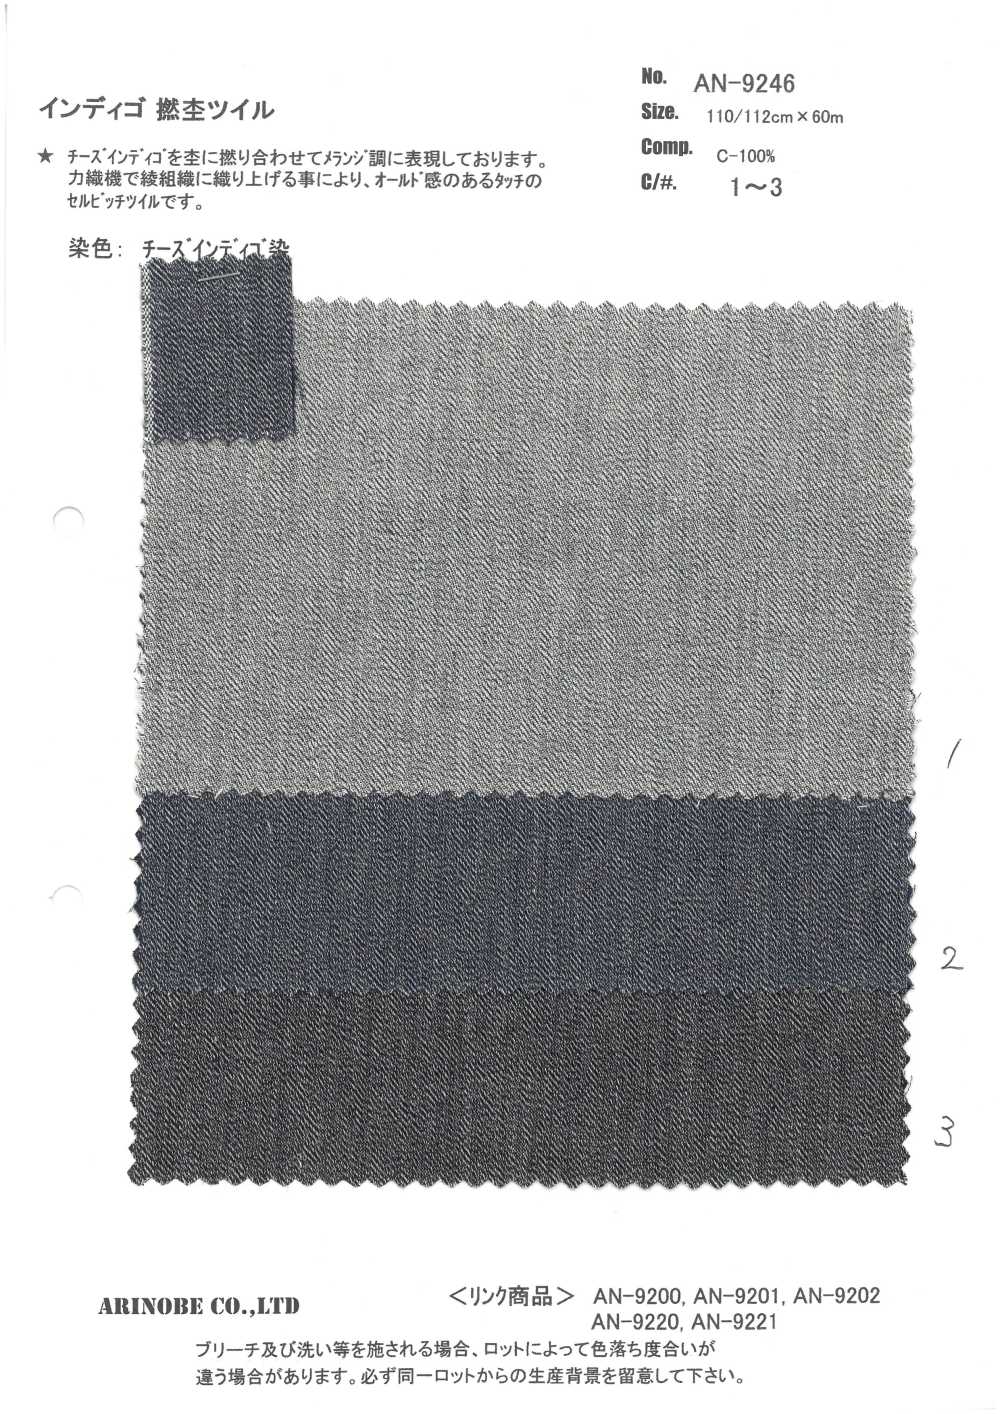 AN-9246 Indigo Twisted Twill[Textilgewebe] ARINOBE CO., LTD.